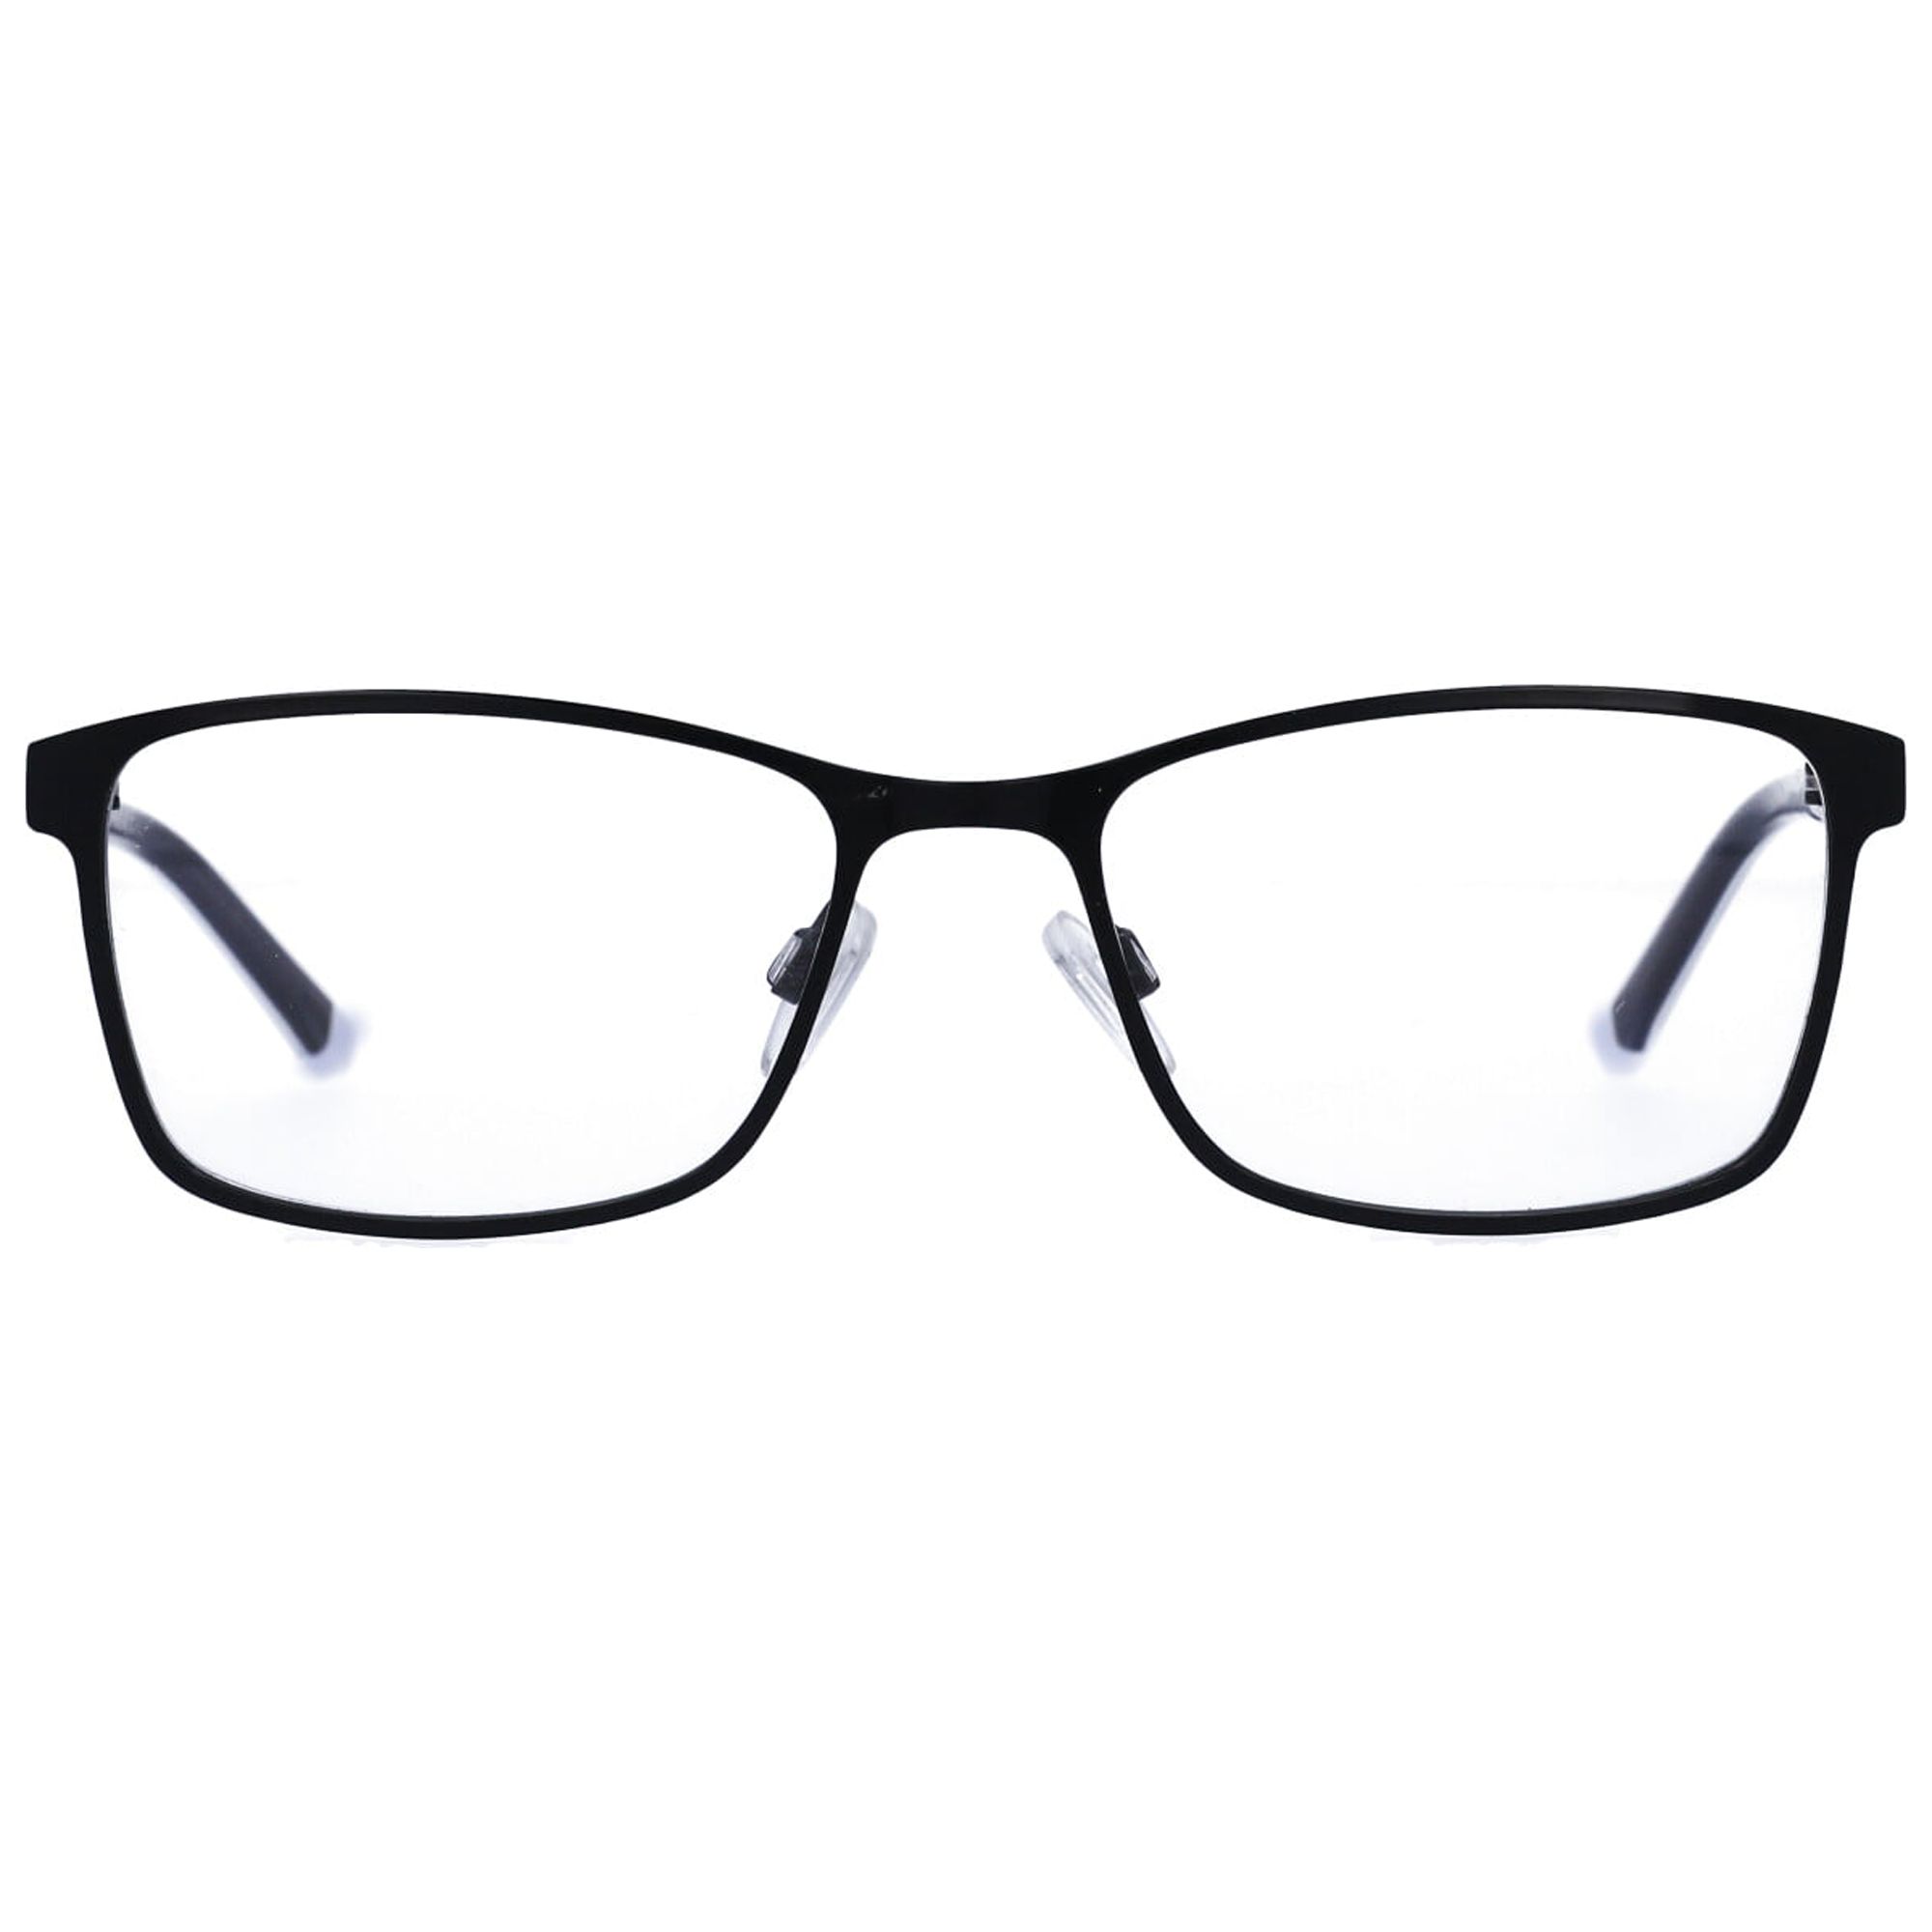 Walmart Women's Rx'able Eyeglasses, WM200951-1, Black, 51-17-135 - image 5 of 12